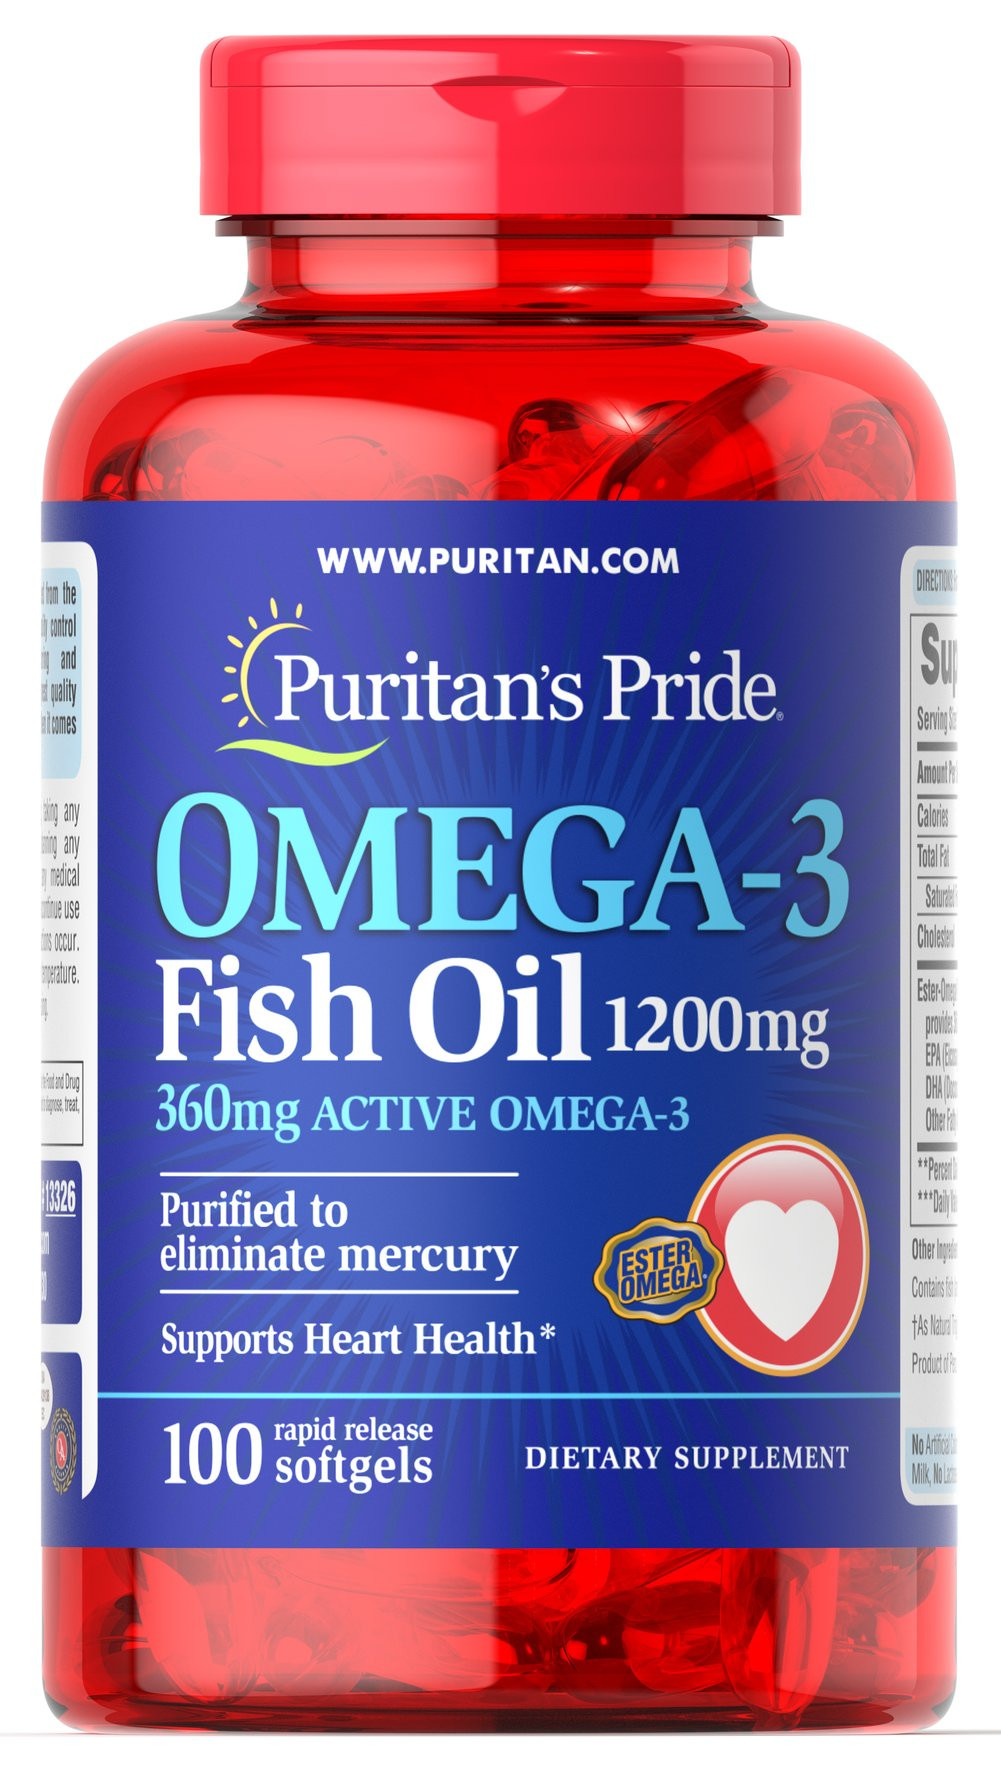 Софт гелеві капсули Omega-3 Fish Oil 1200 mg (360 mg Active Omega-3) - 100 Softgels 100-13-5213894-20